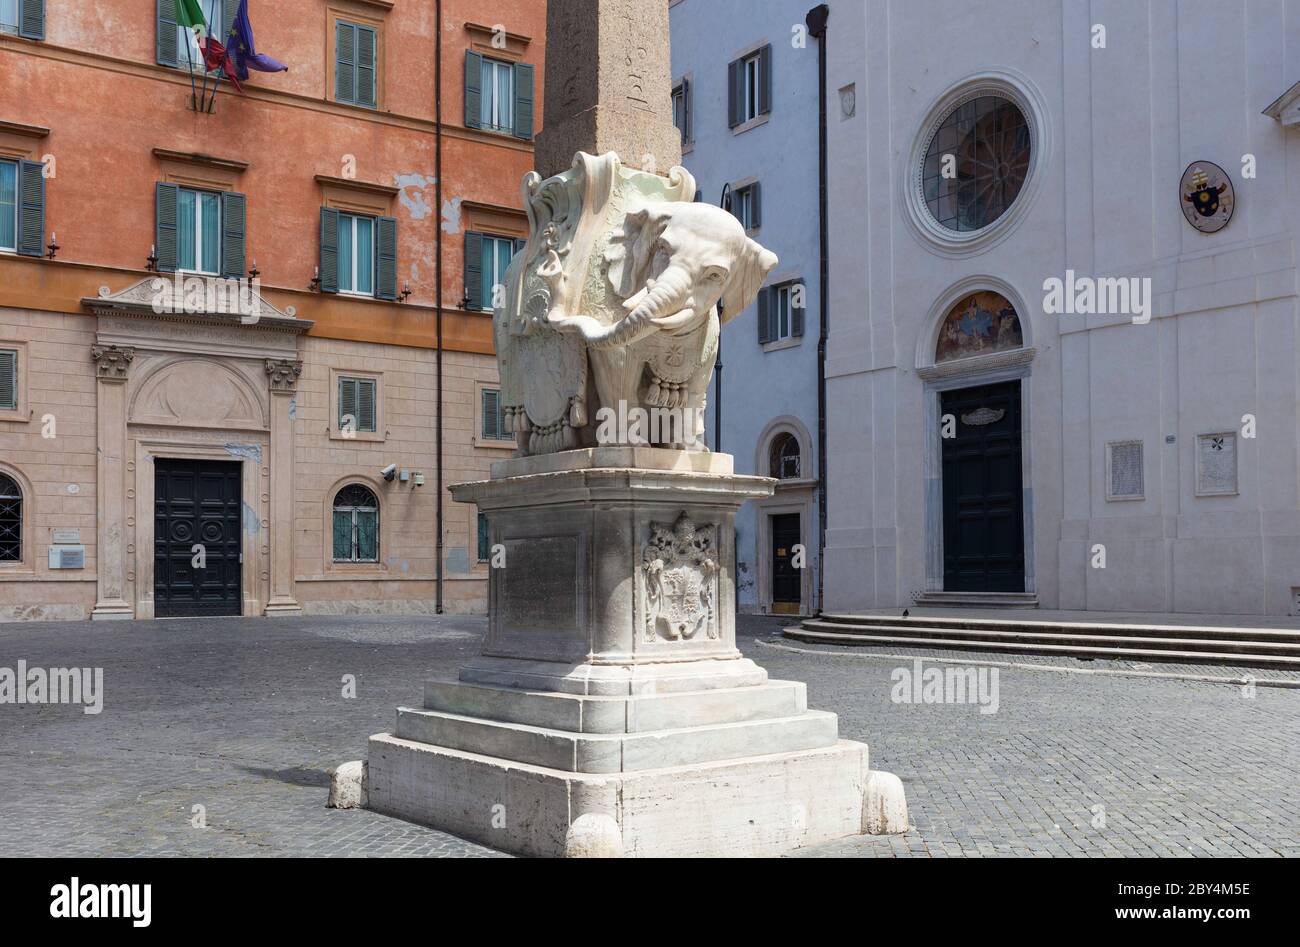 The baroque Elephant monument, by Gian Lorenzo Bernini in Piazza della Minerva by Santa Maria sopra Minerva, designed to support an Egyptian Obelisk. Stock Photo